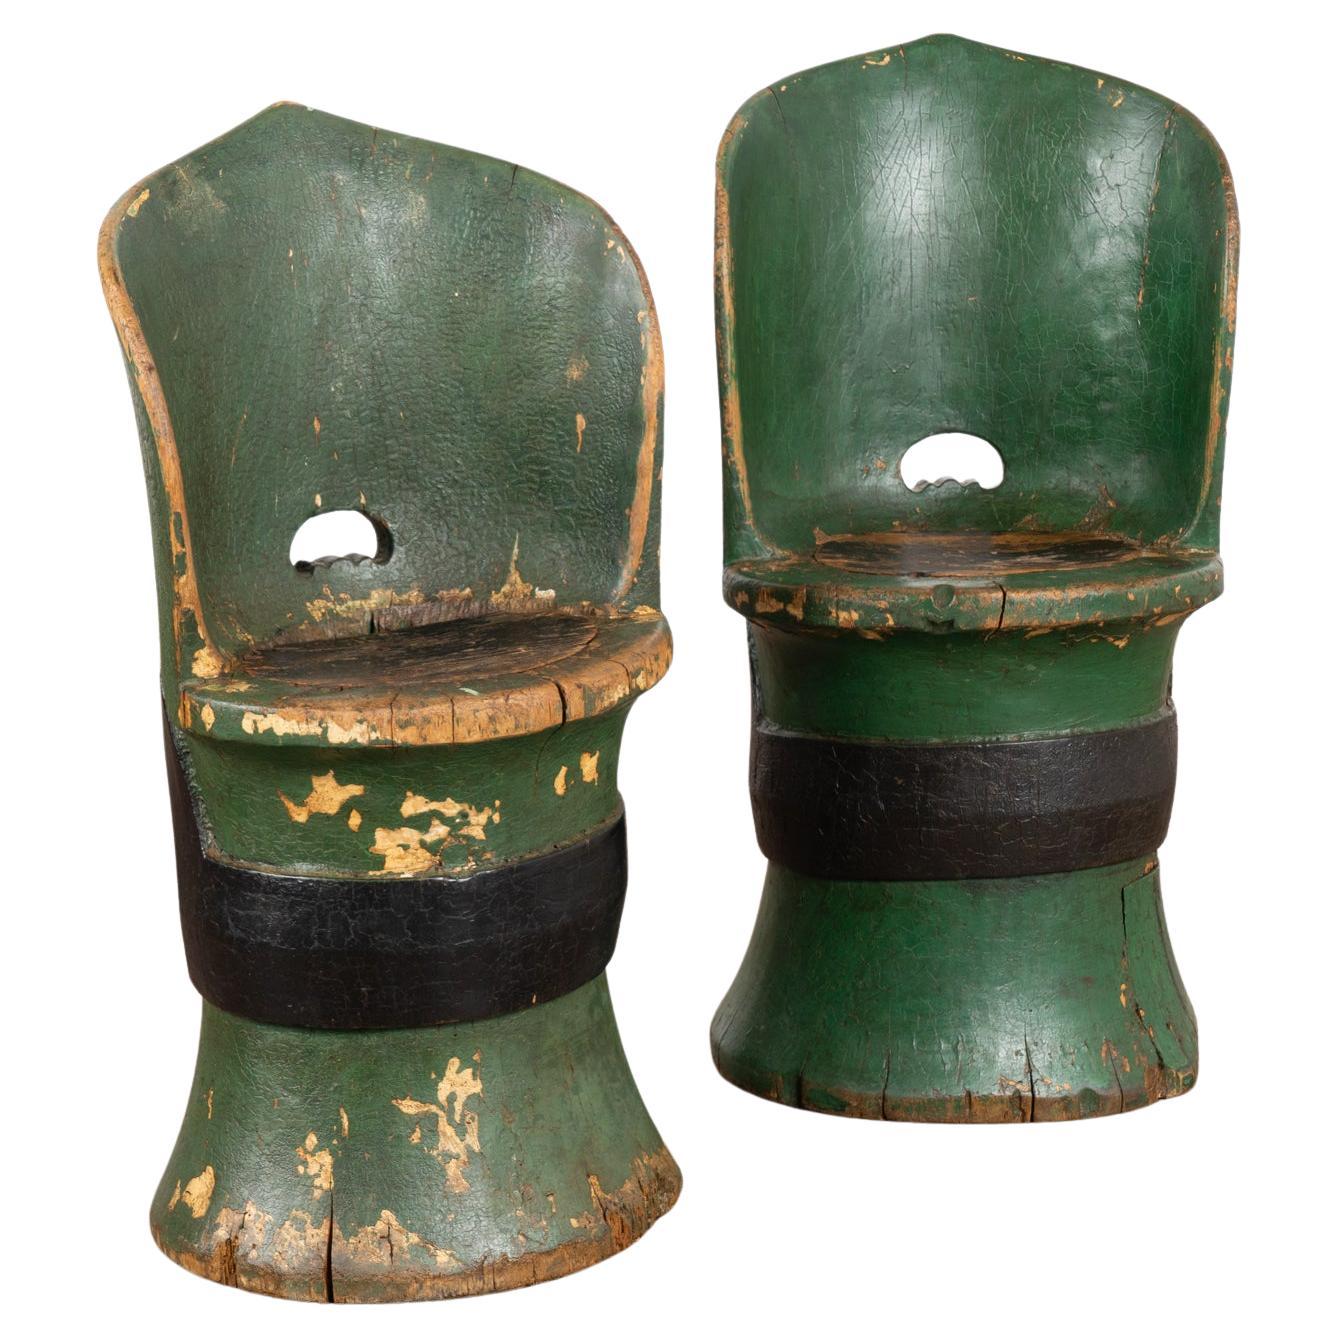 Pair of Original Green Painted Kubbestol Chairs, Sweden circa 1880